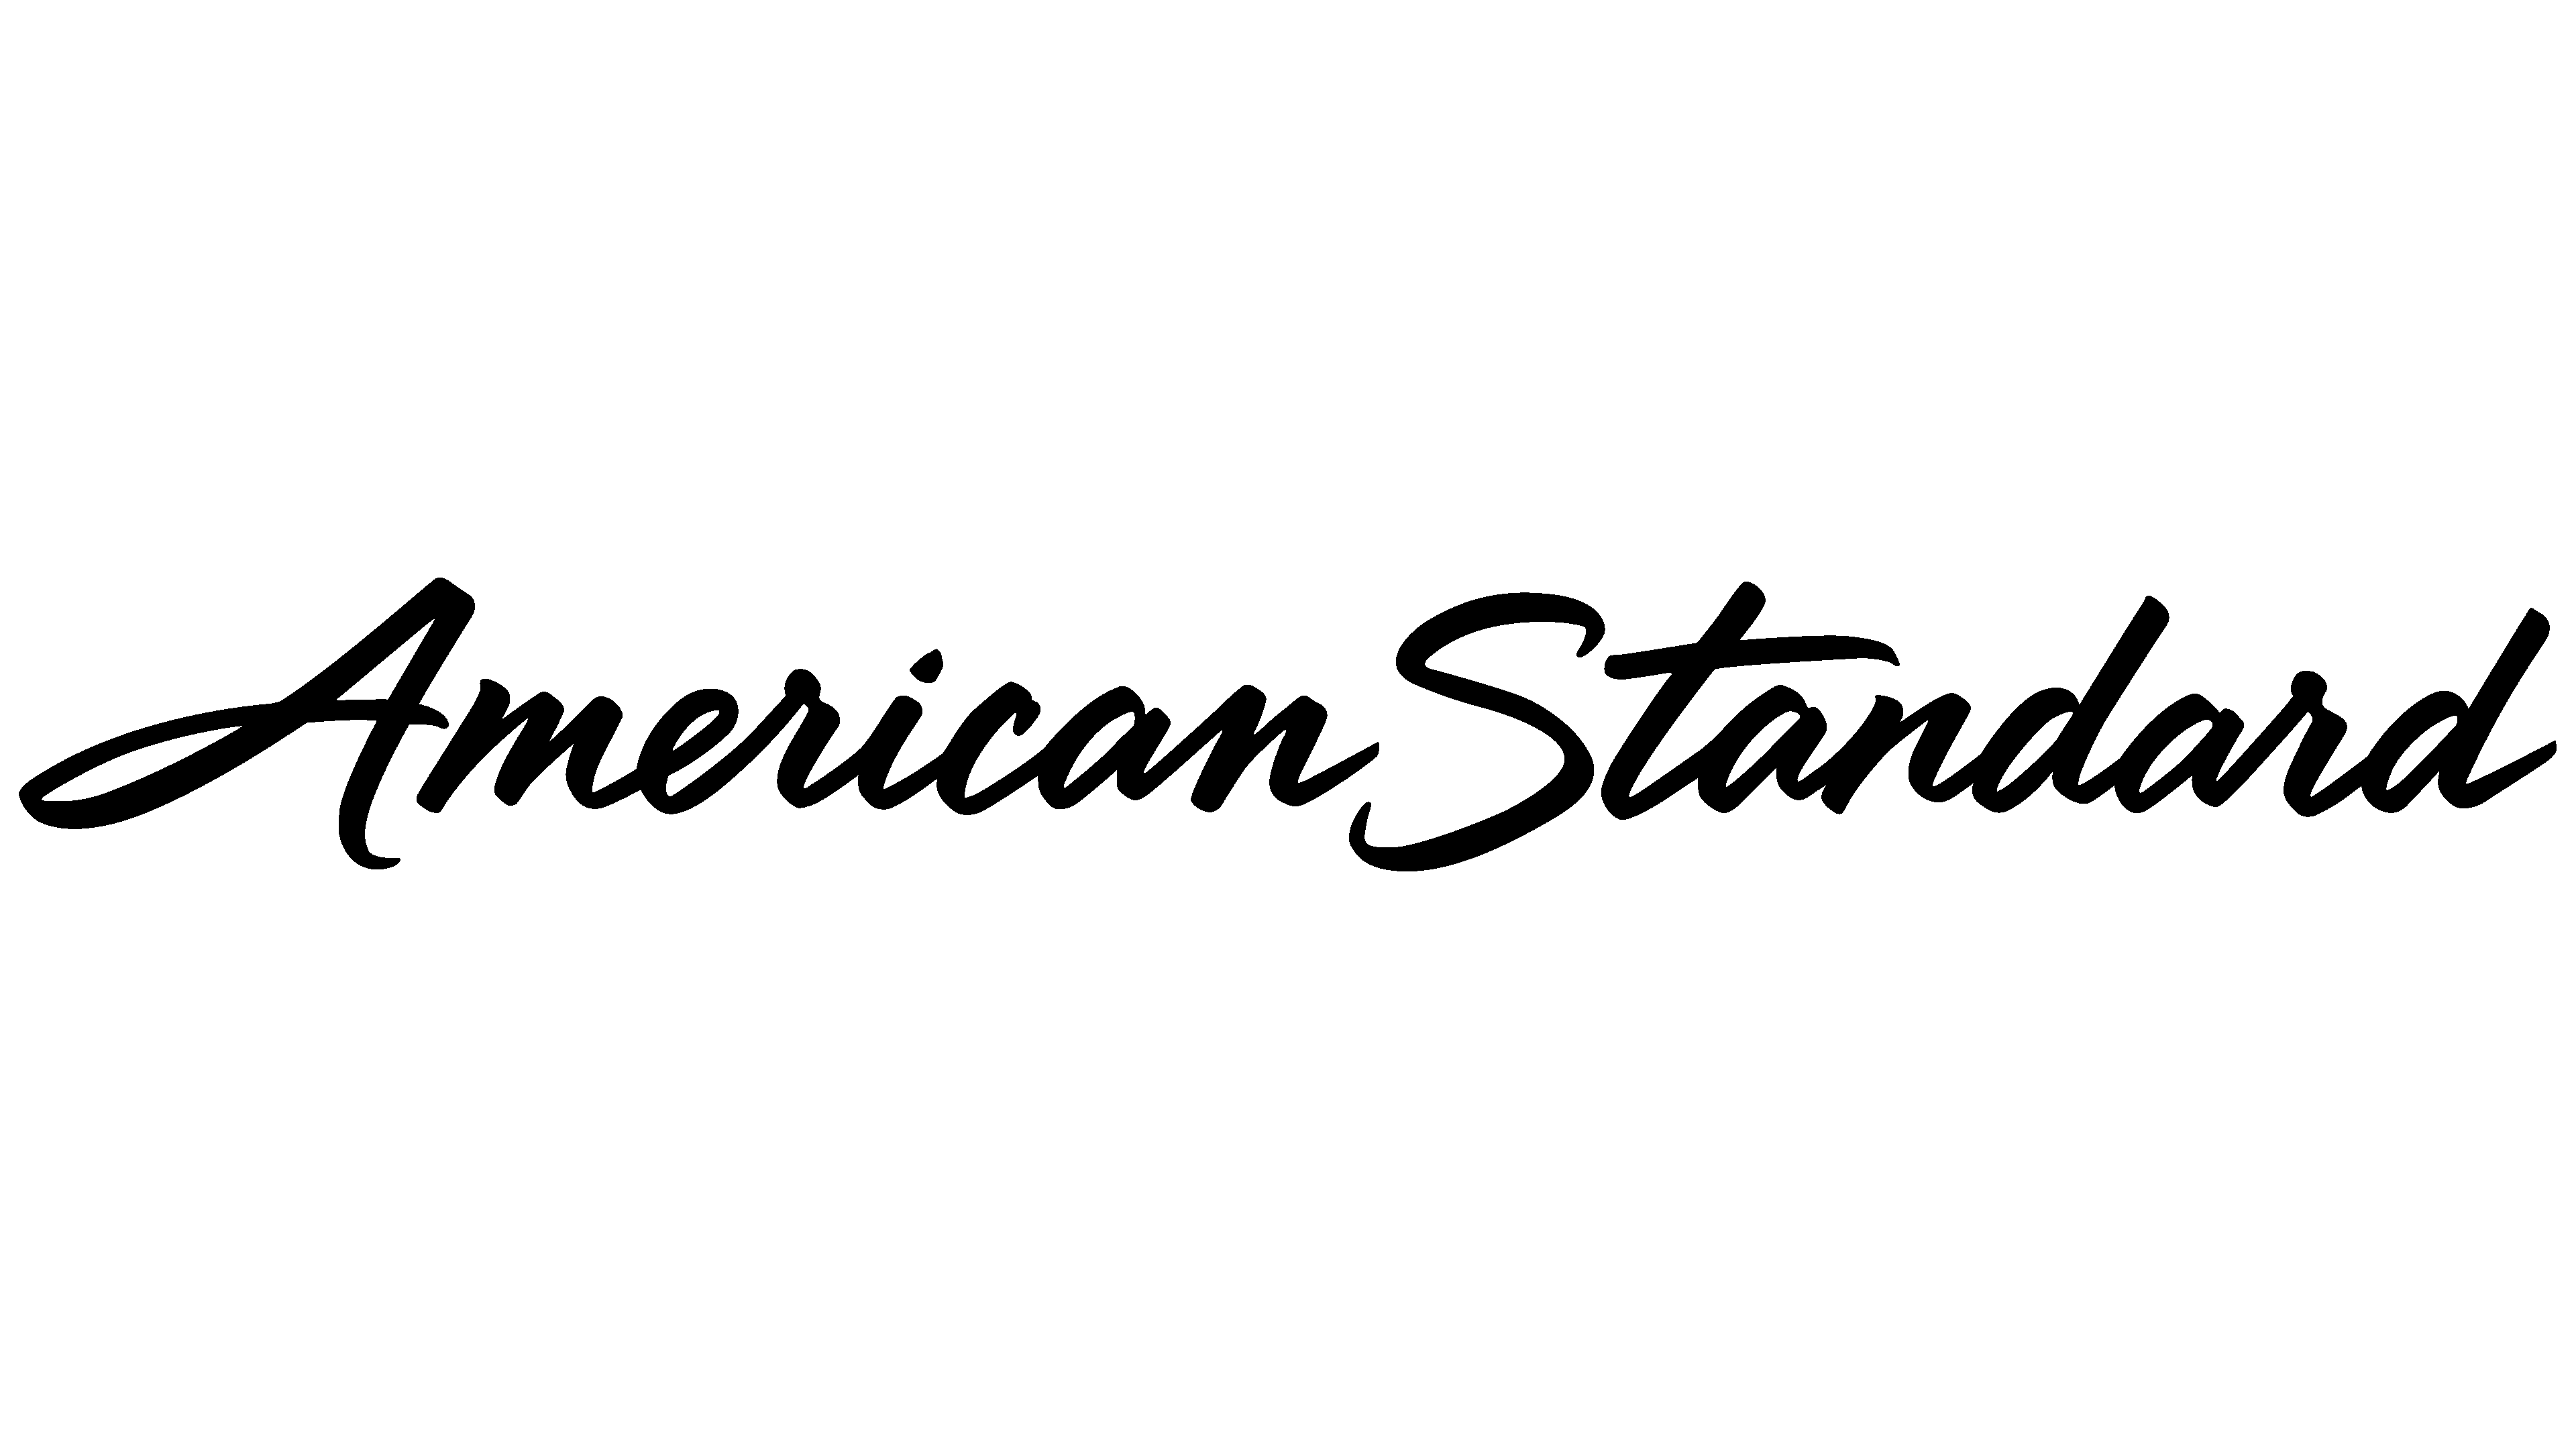 american standard logo